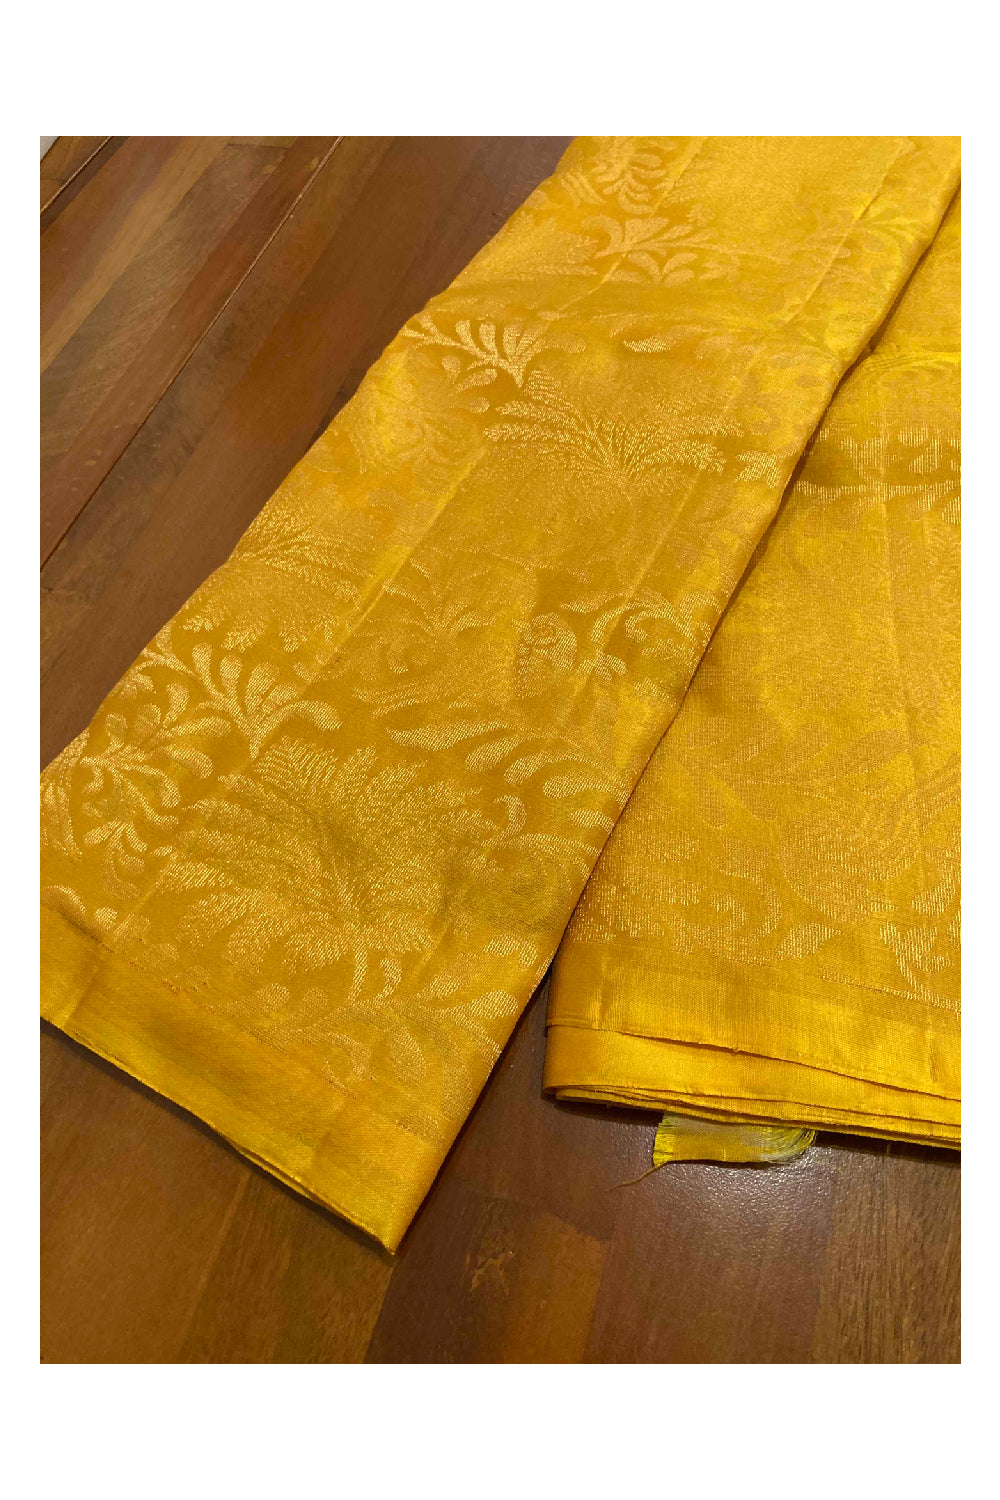 Southloom Handloom Pure Silk Manthrakodi Kanchipuram Saree in Single Yellow Colour and Zari Motifs